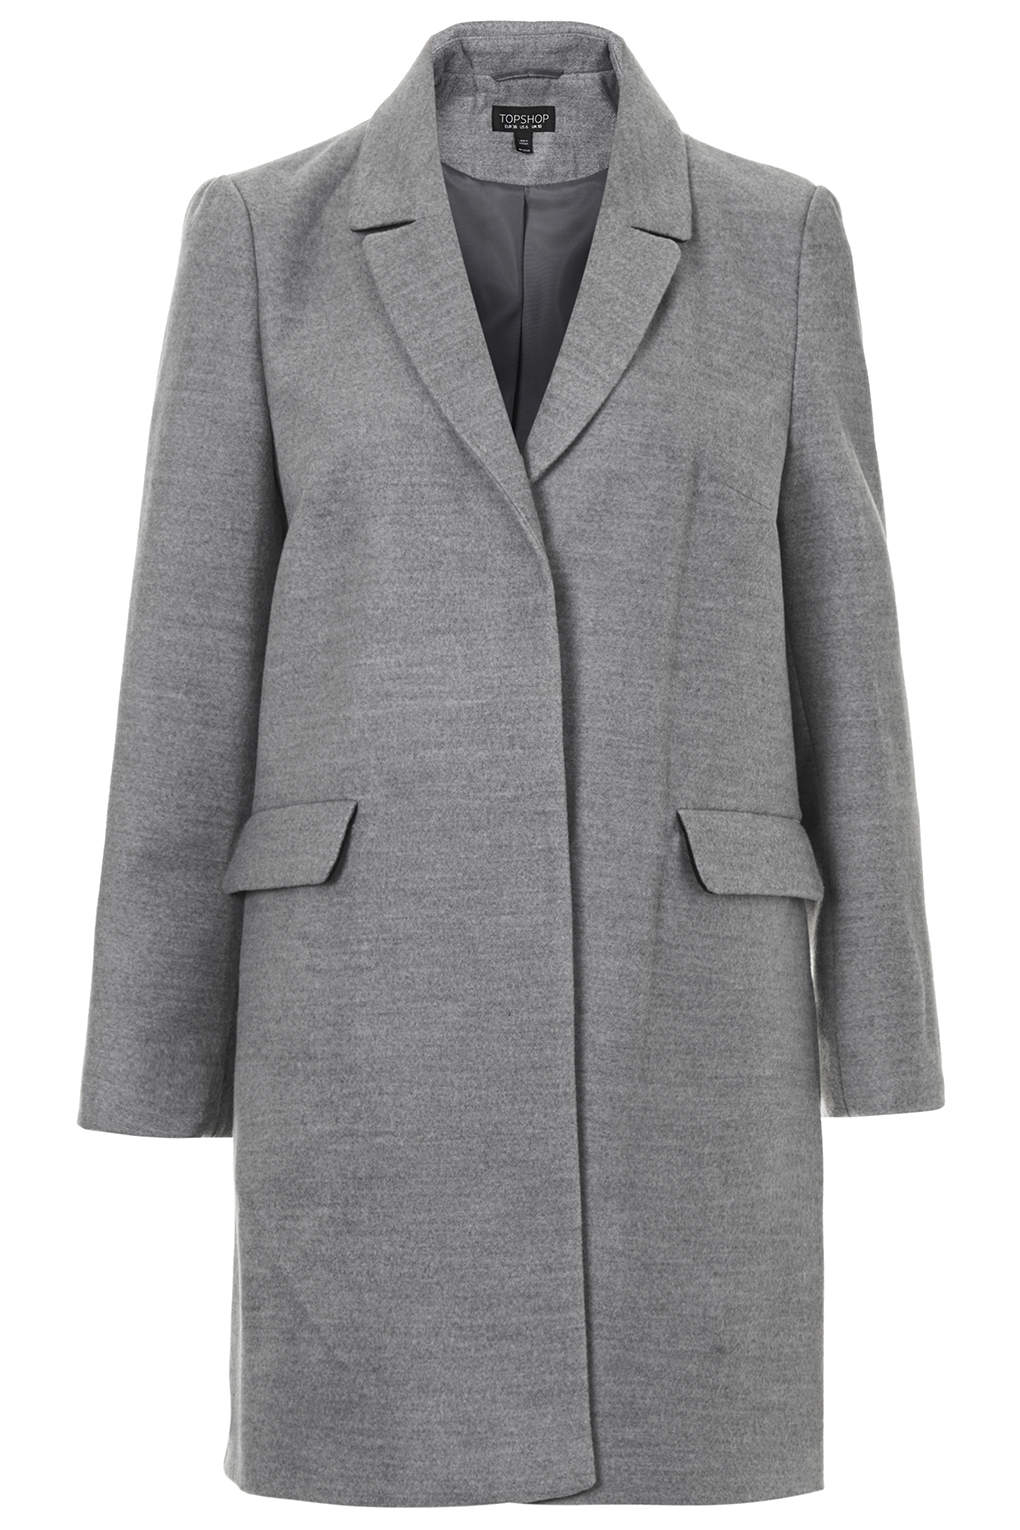 Topshop Slim Pocket Detail Coat in Gray (GREY) | Lyst